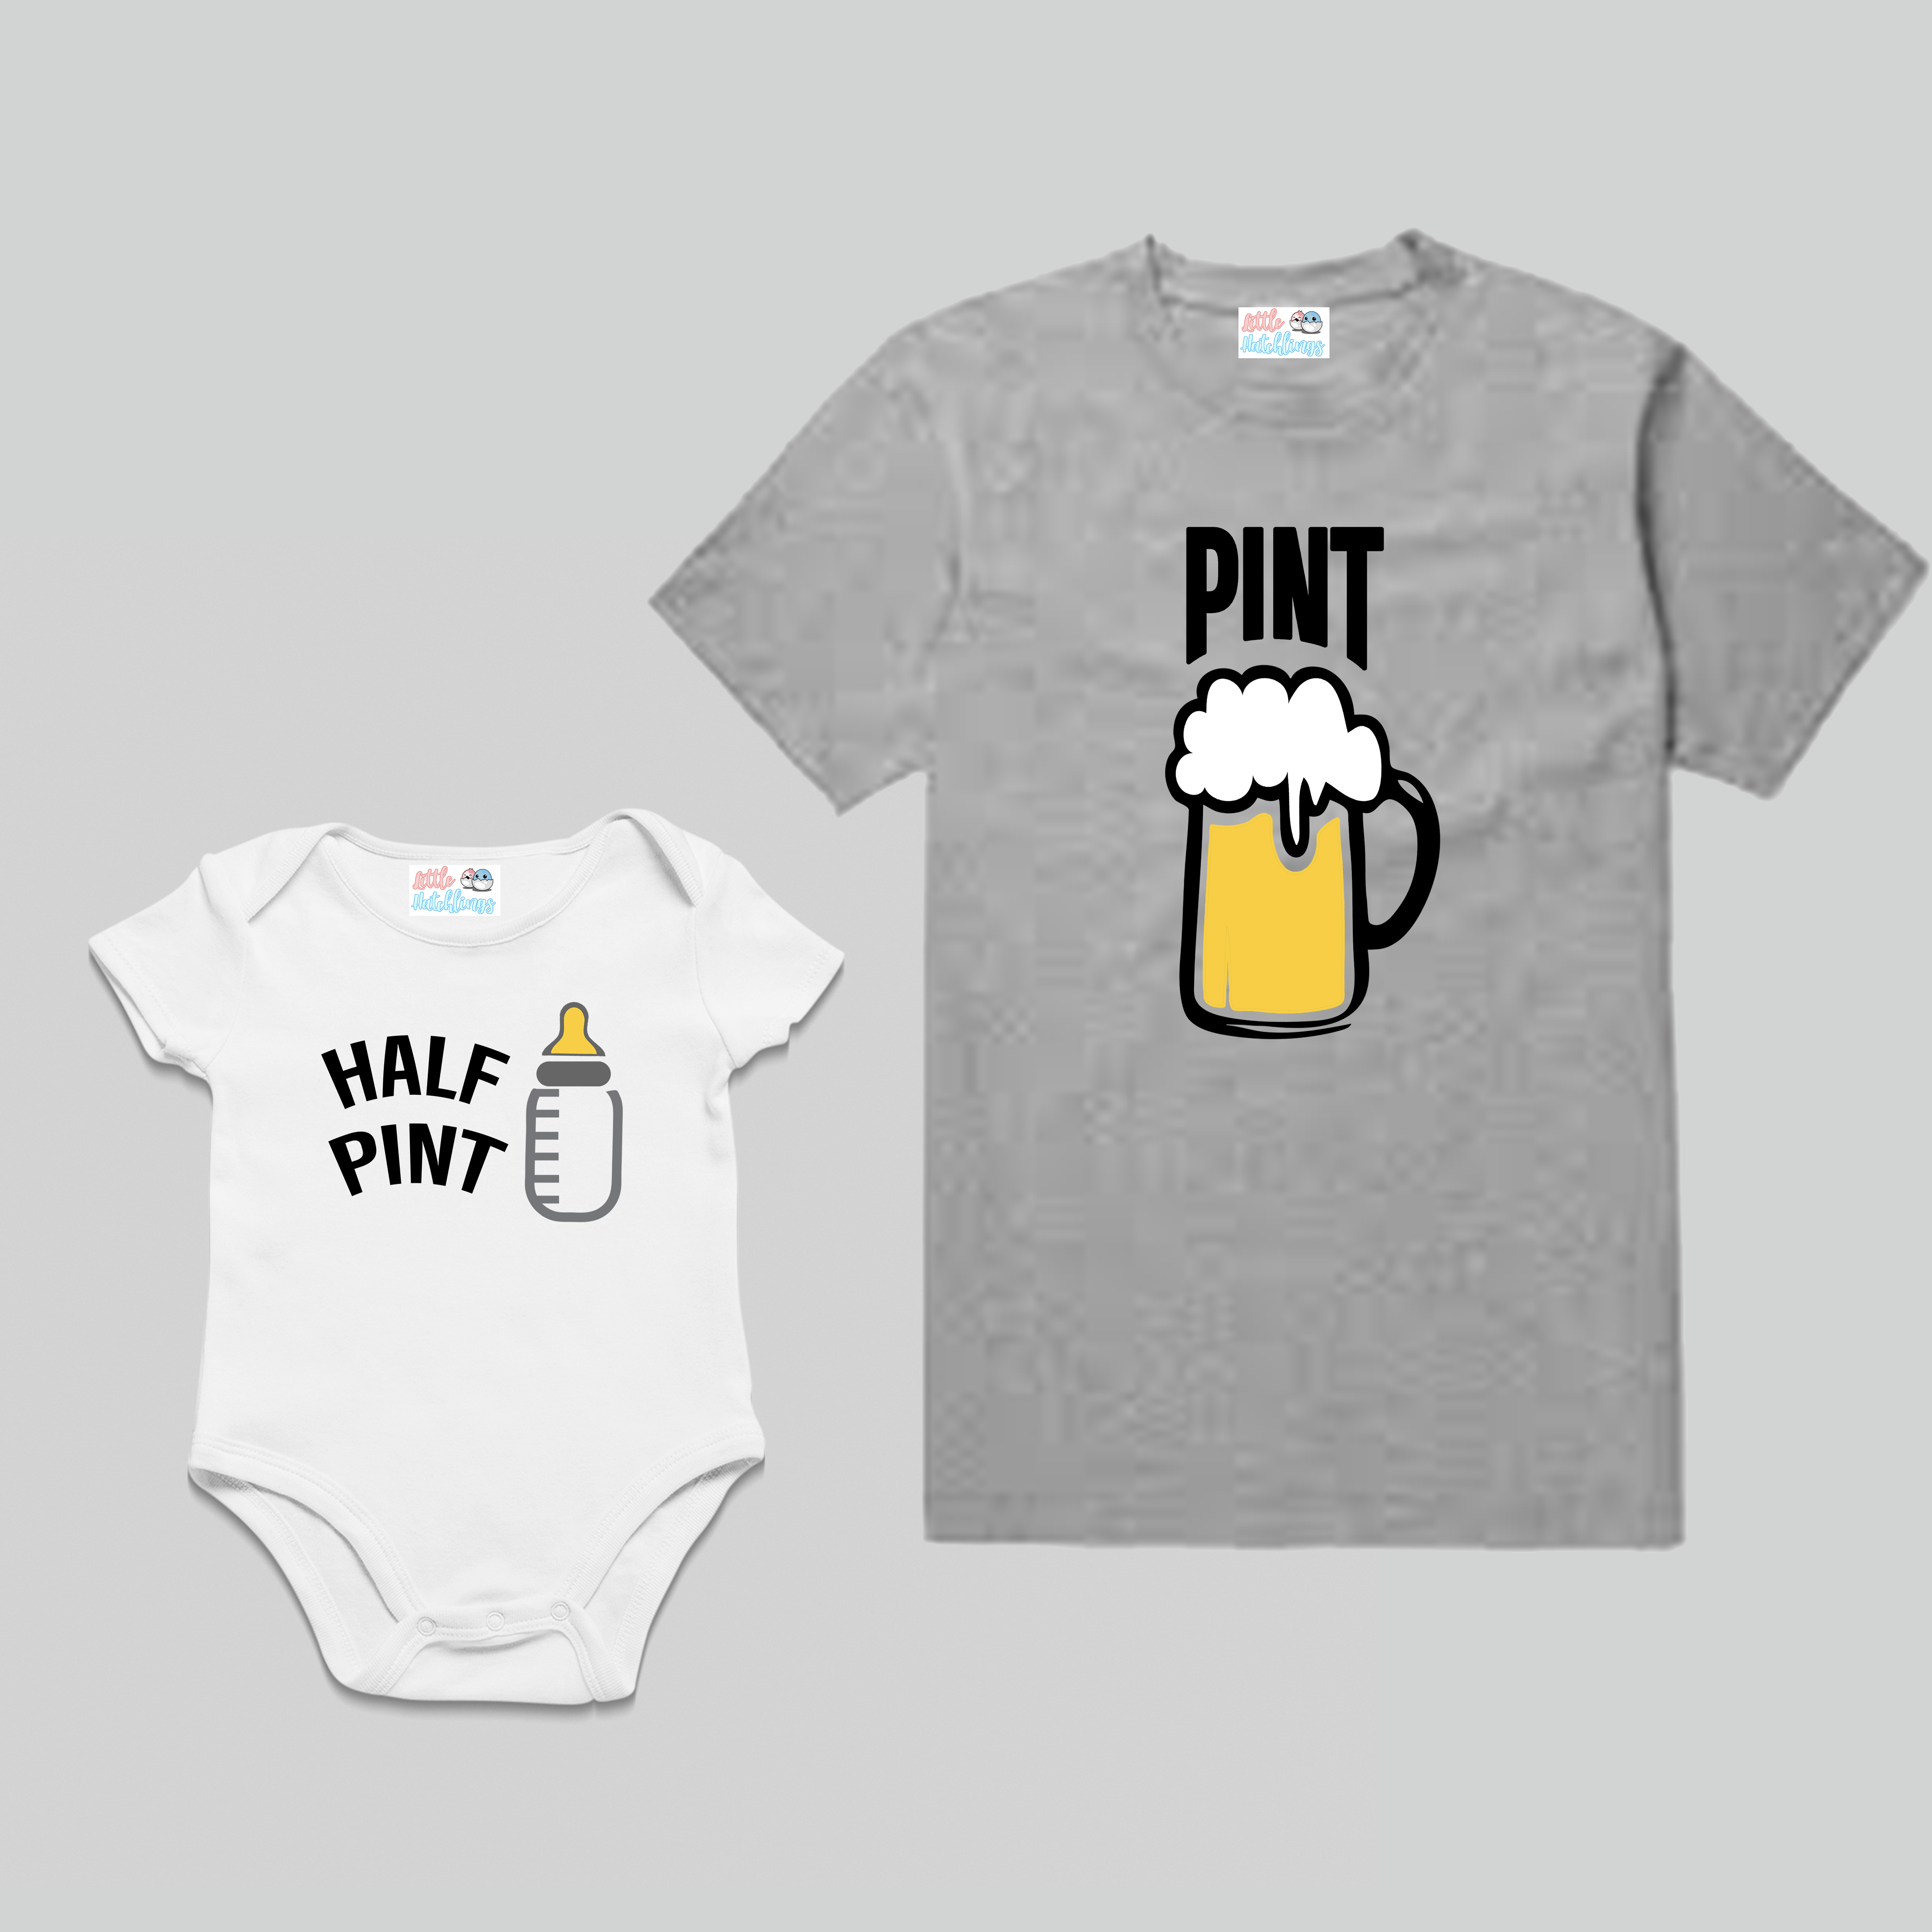 Pint + Half Pint White and Grey Combo (Milk Bottle & Beer Mug) - Adult Tshirt + Full Romper